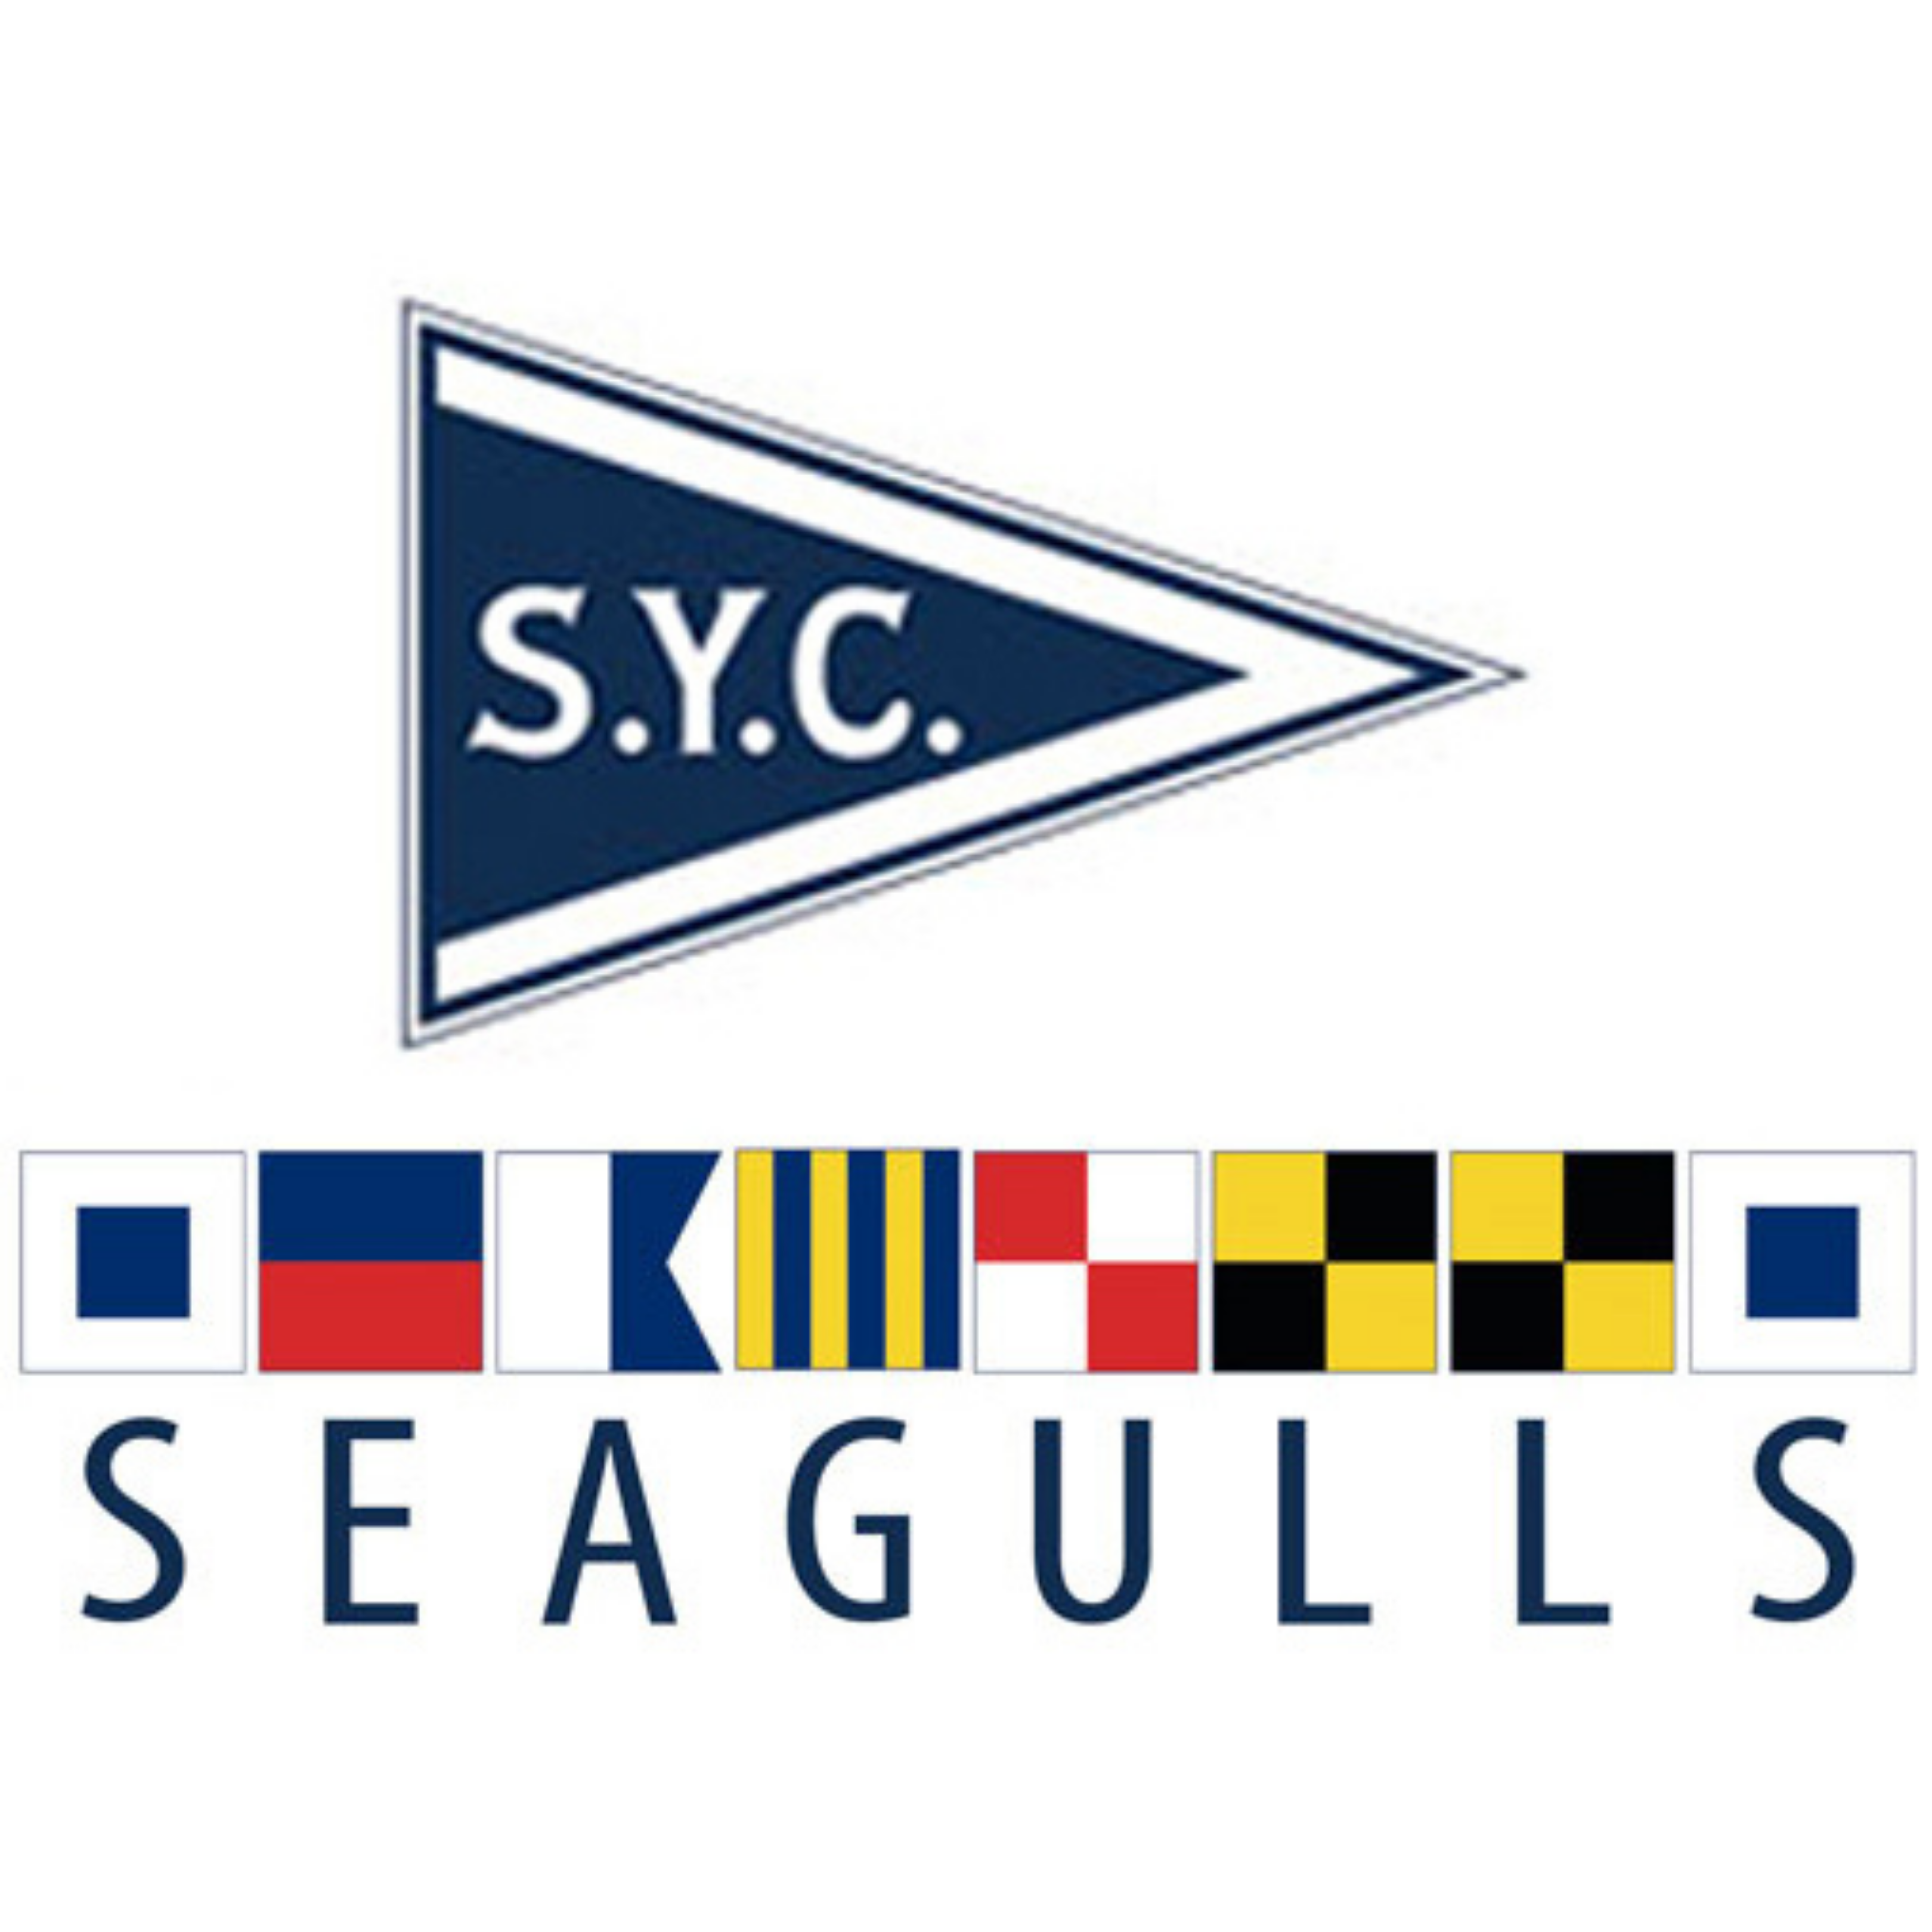 SYC Seagulls